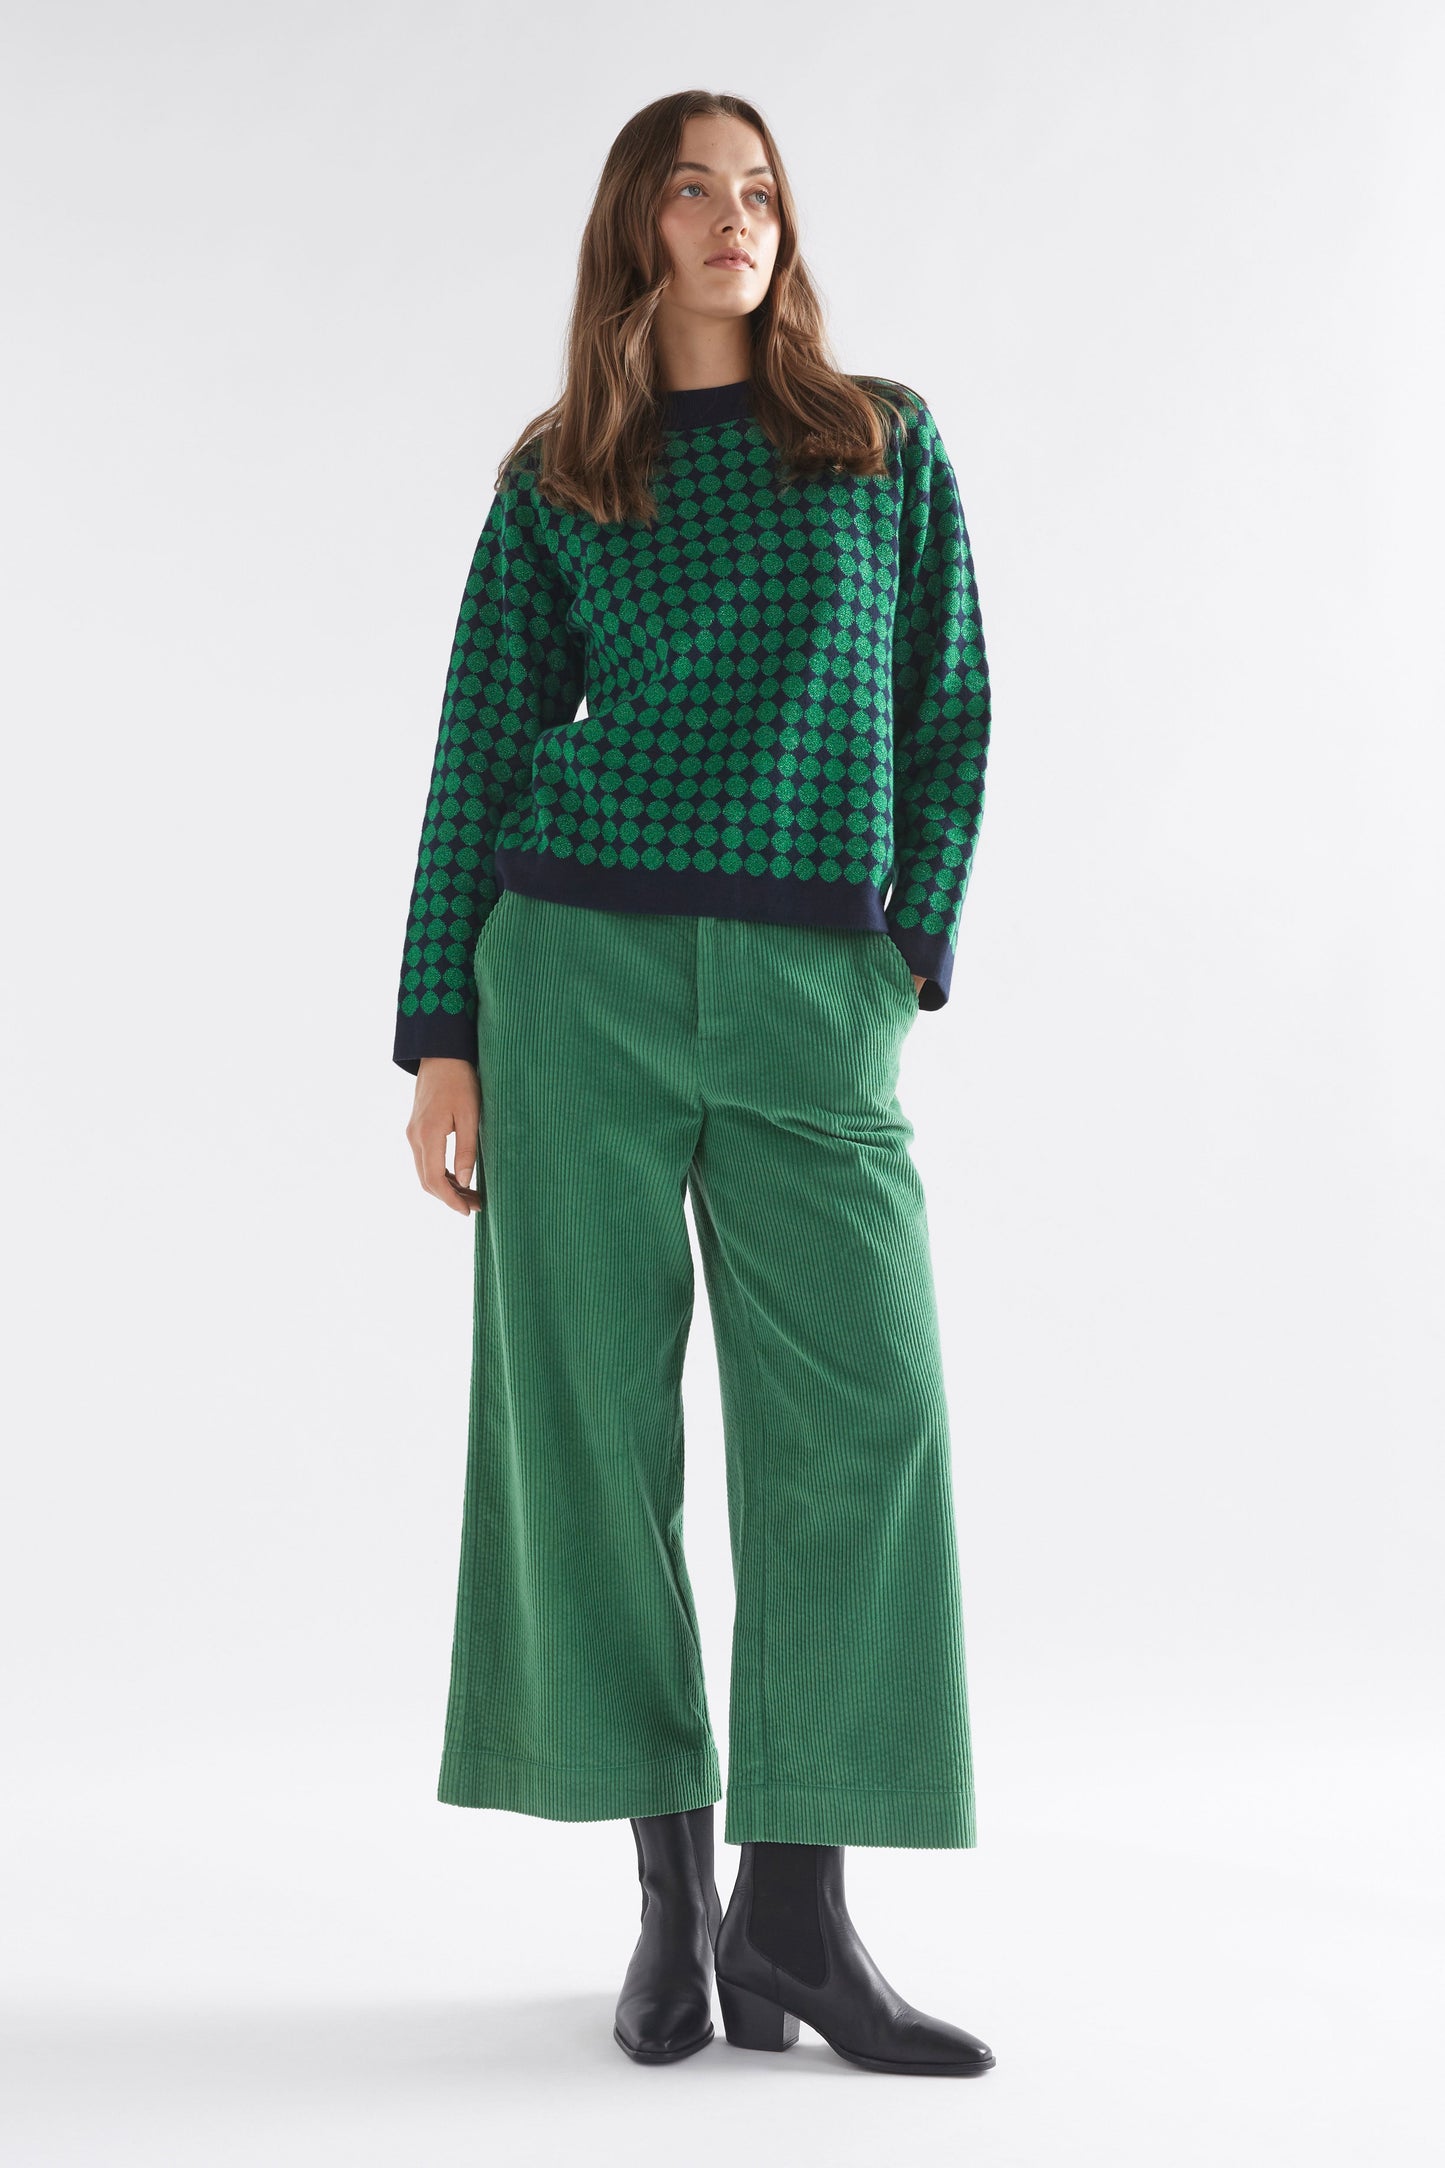 Leira Mock Turtle Neck Dropped Sleeve Metallic Circle Knit Sweater Model Front Full Body | NAVY GREEN METALLIC